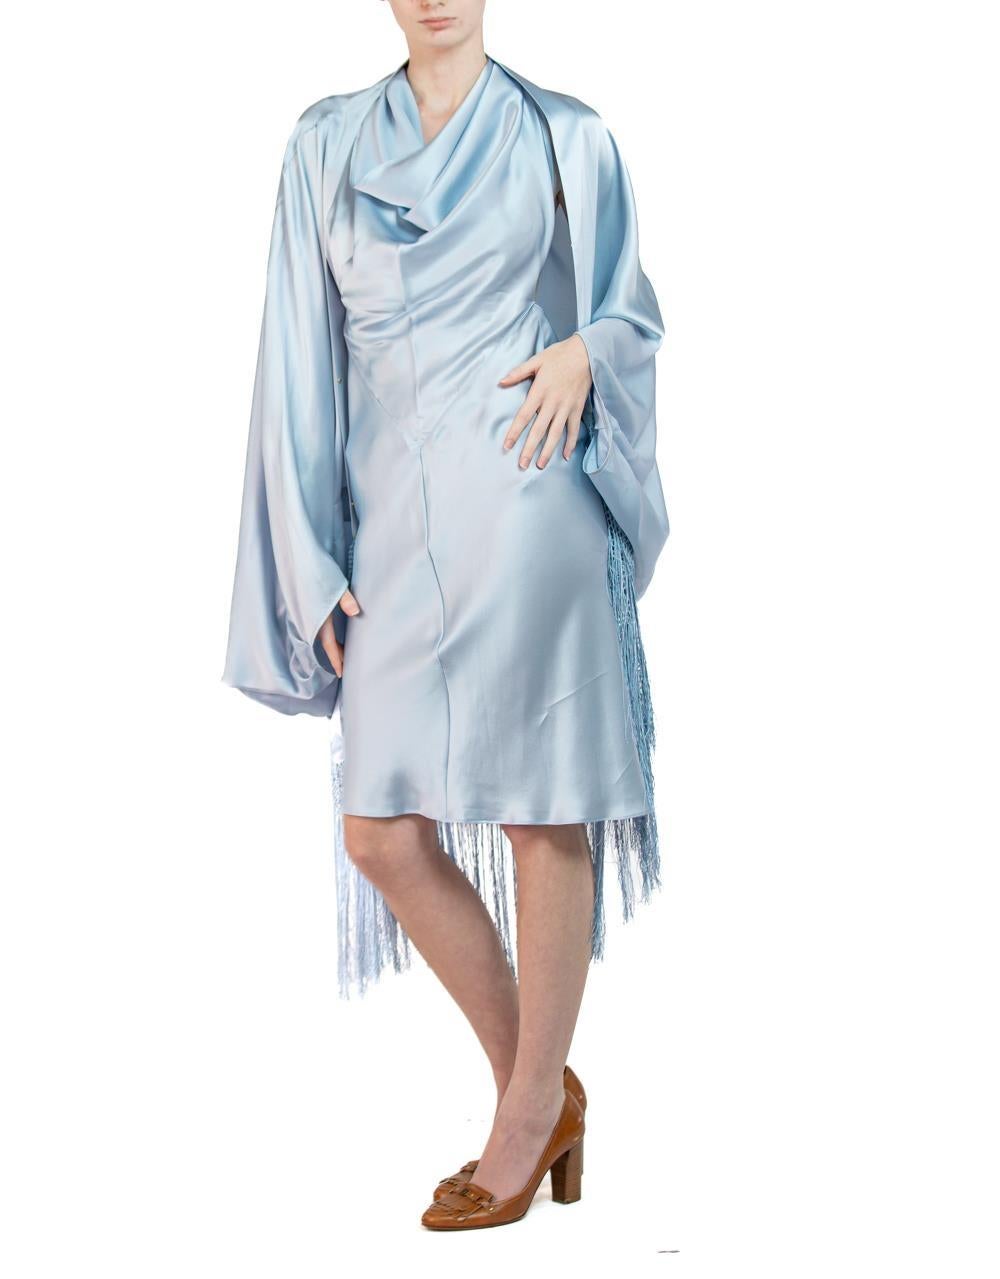 MORPHEW COLLECTION Ice Blue Silk Charmeuse Sagittarius Dress For Sale 5